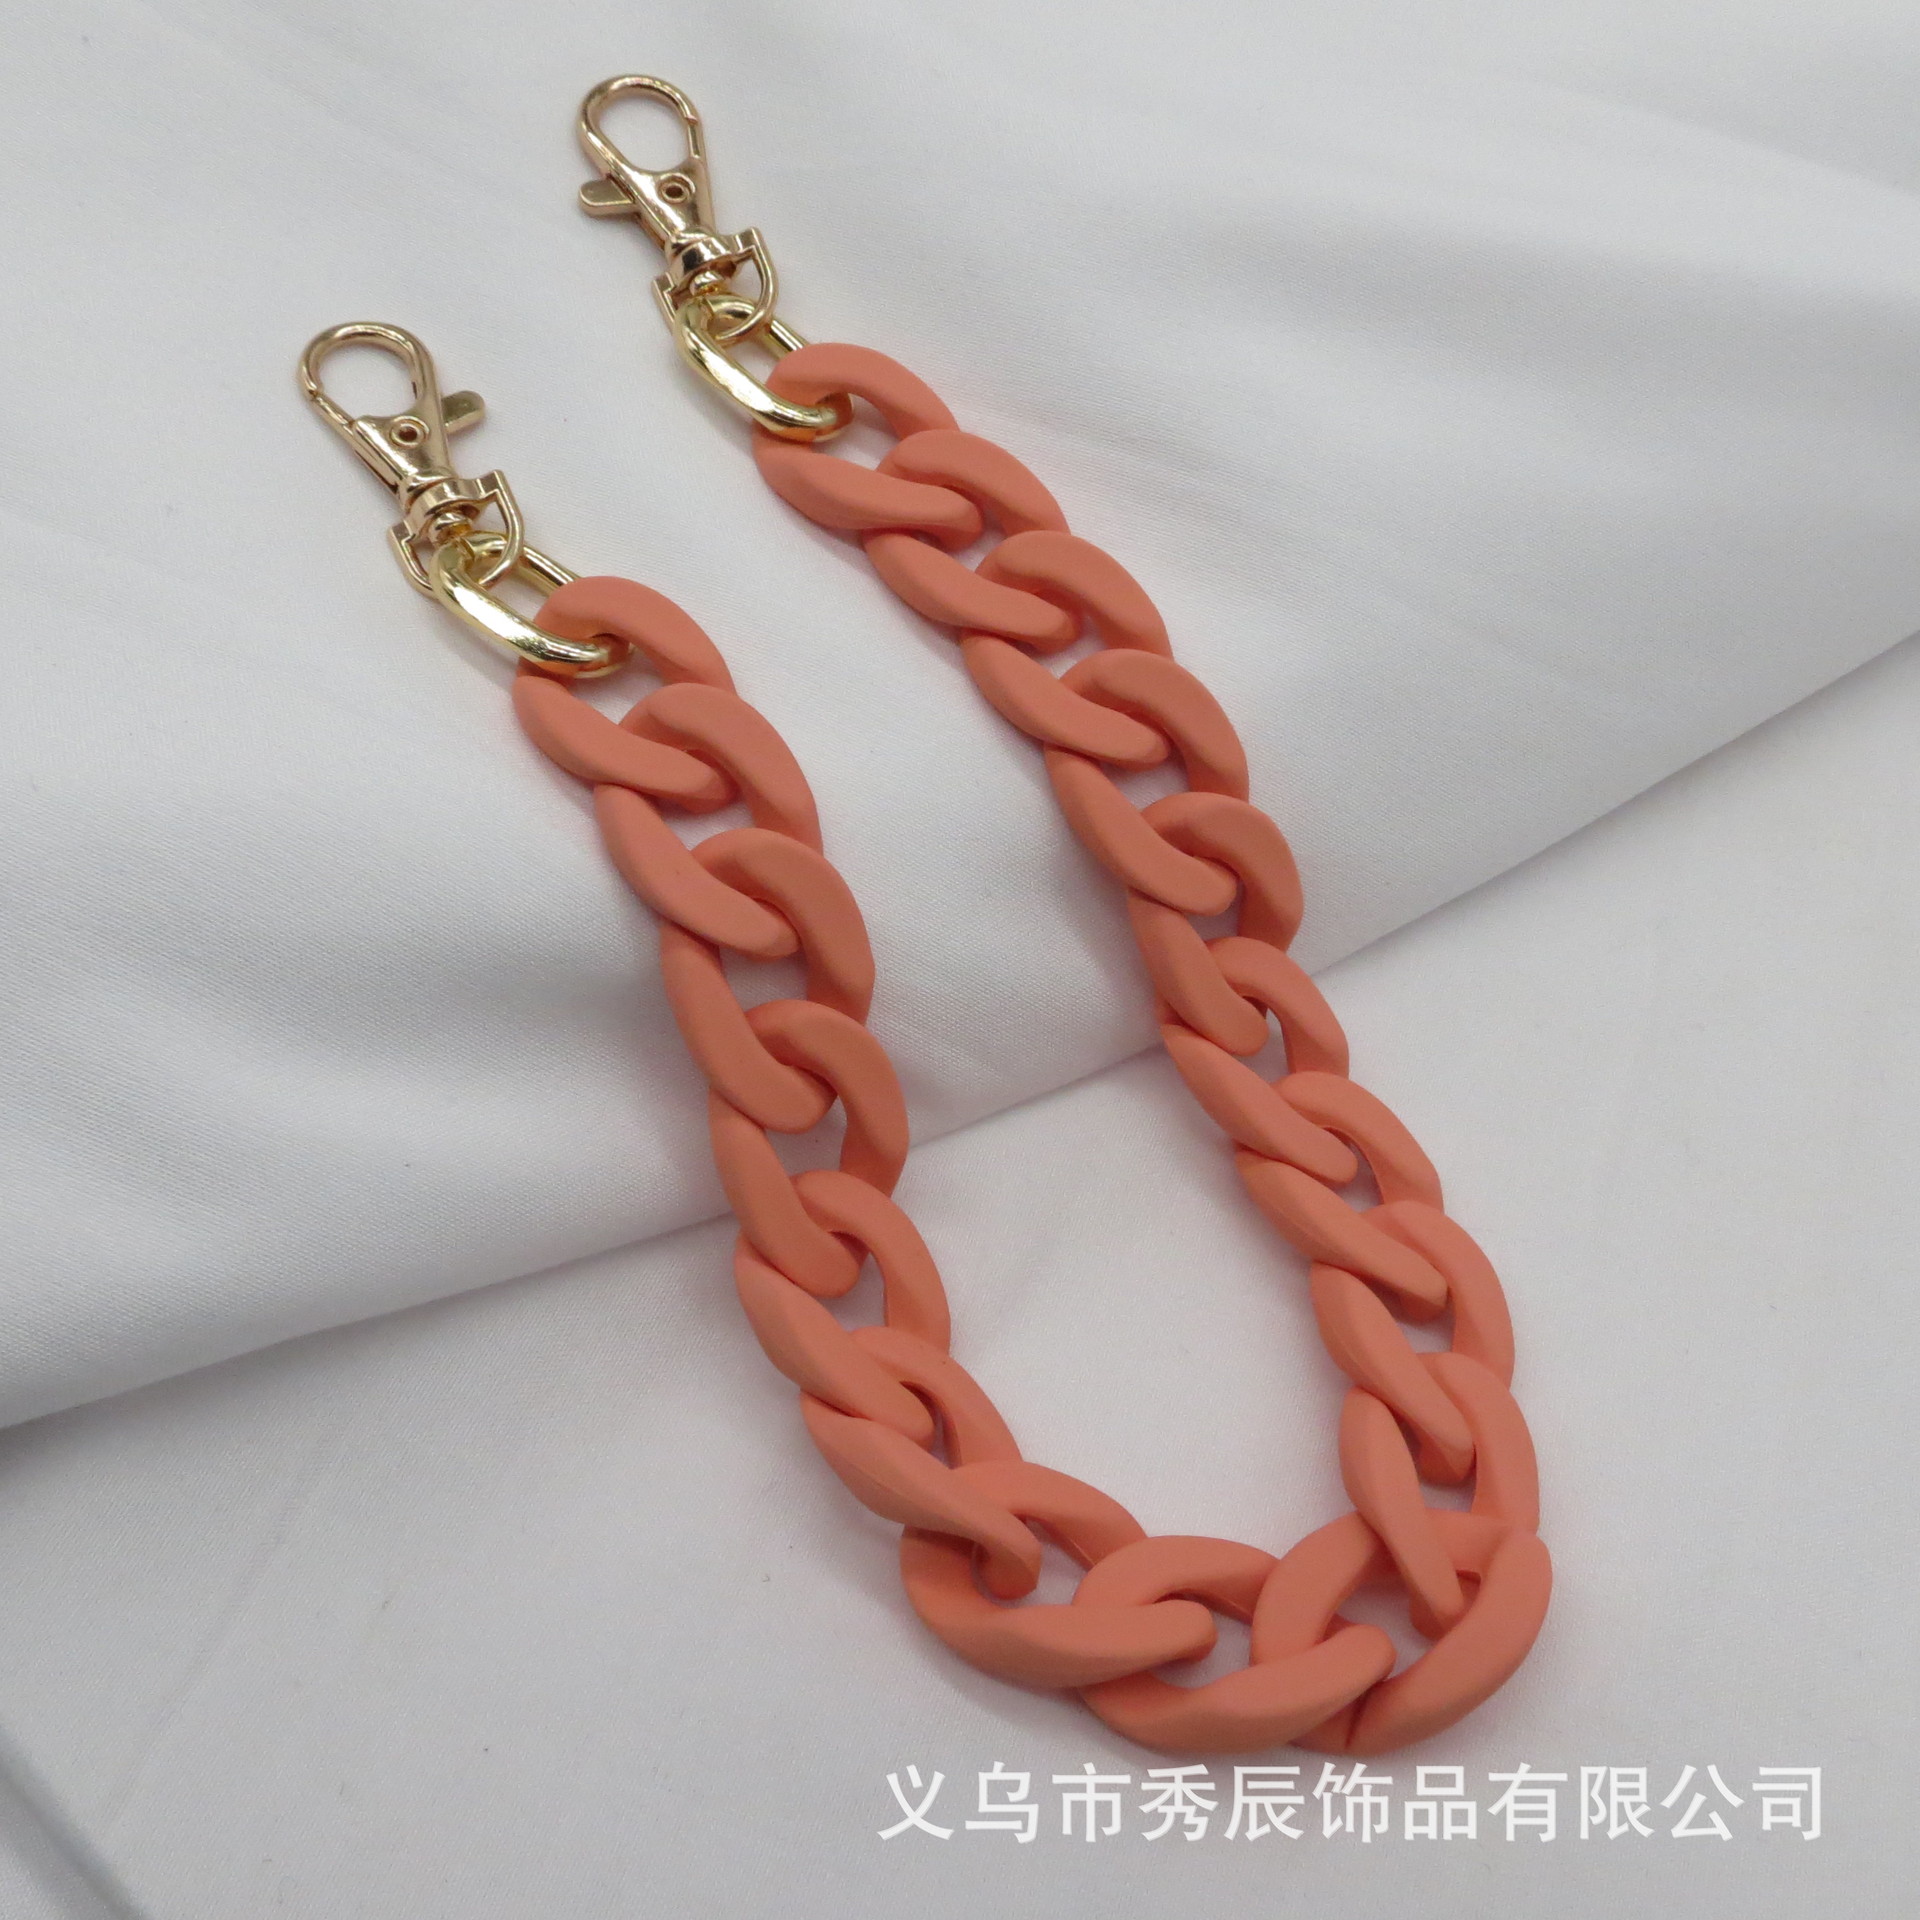 Origin Supply Acrylic Feel Enamelling Chain Decoration Rubber Tote Chain Luggage Accessories